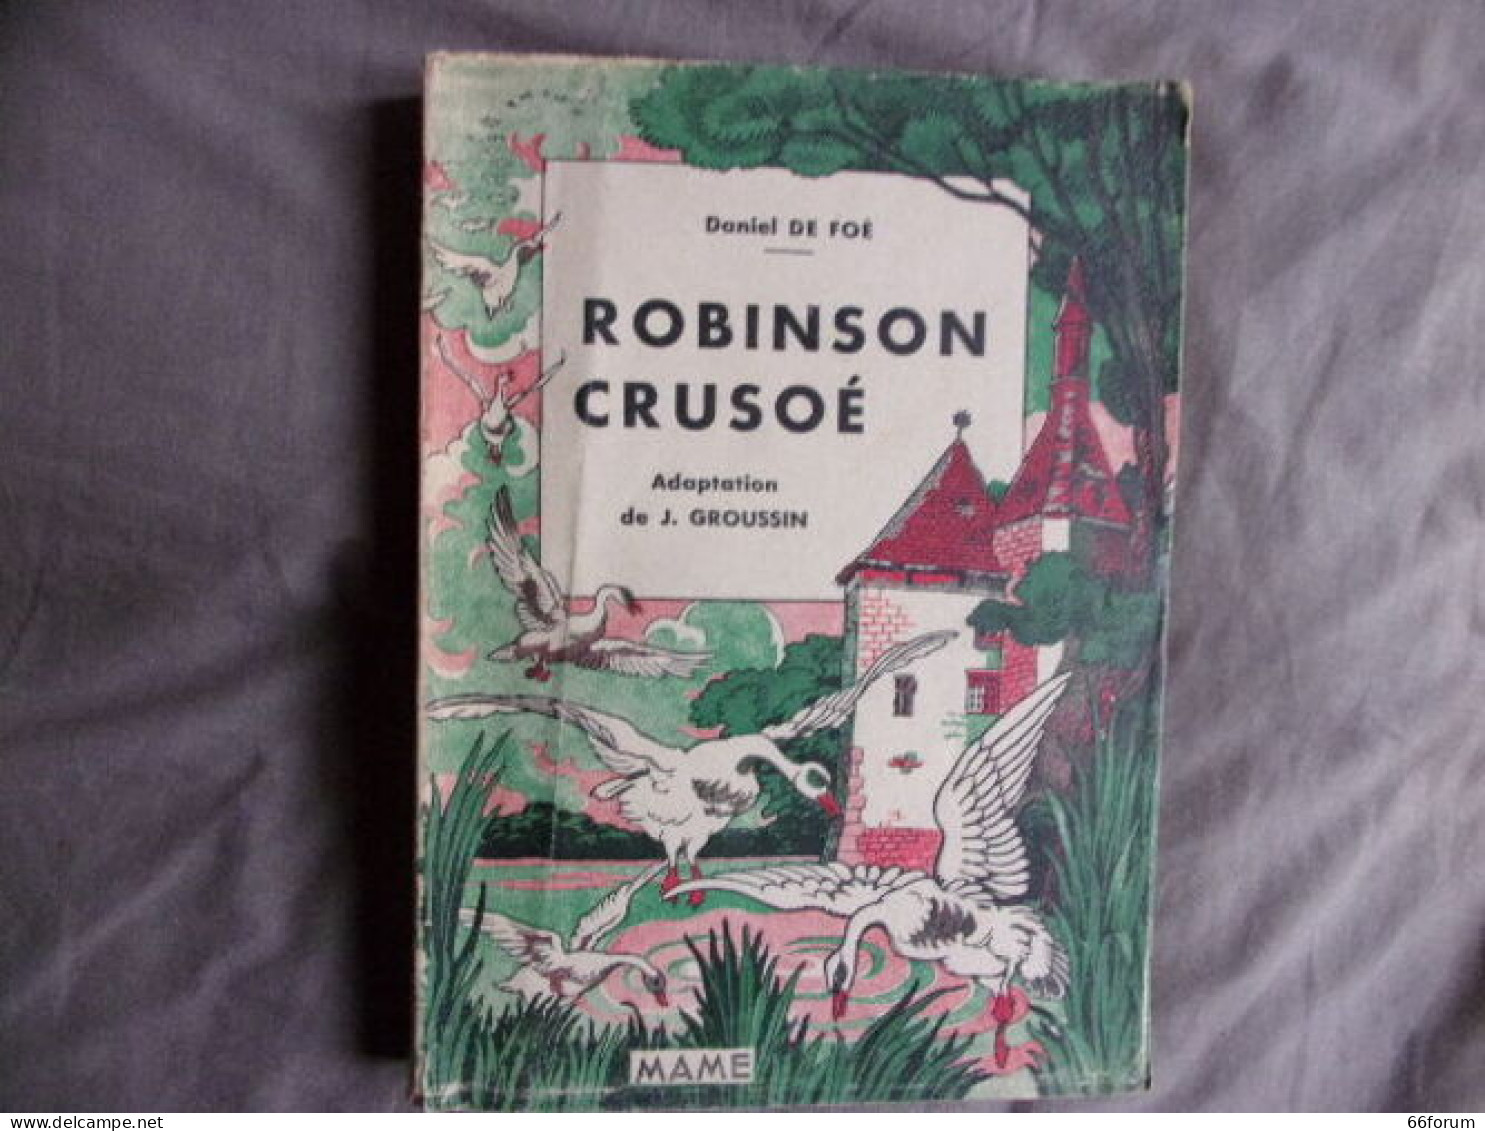 Robinson Crusoe - 1701-1800